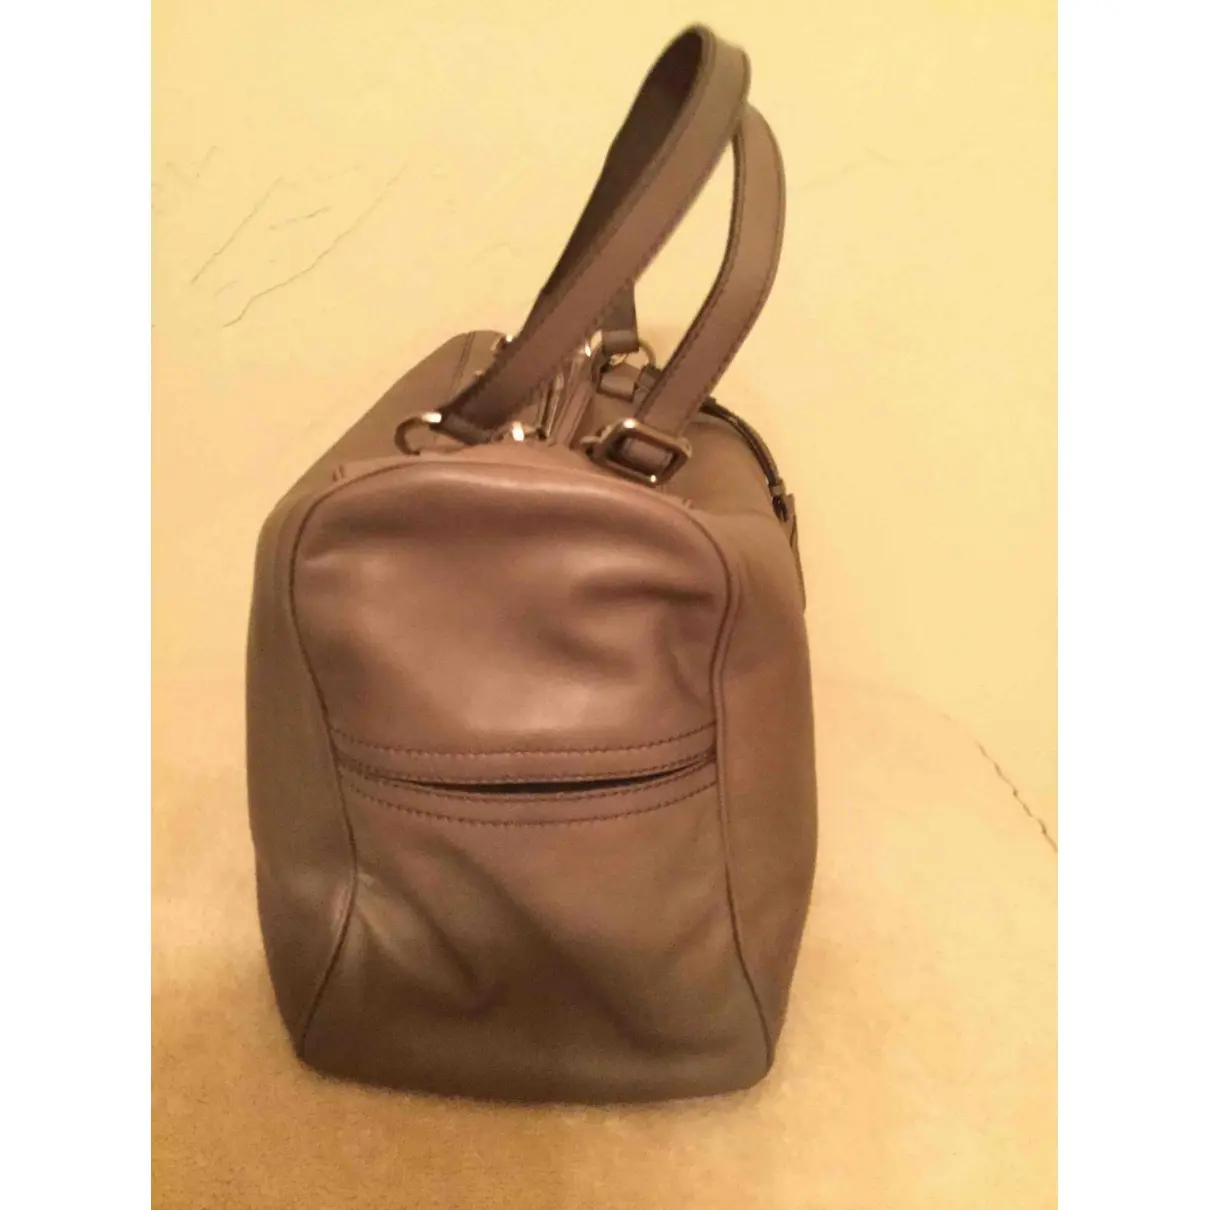 Buy Yves Saint Laurent Easy leather handbag online - Vintage